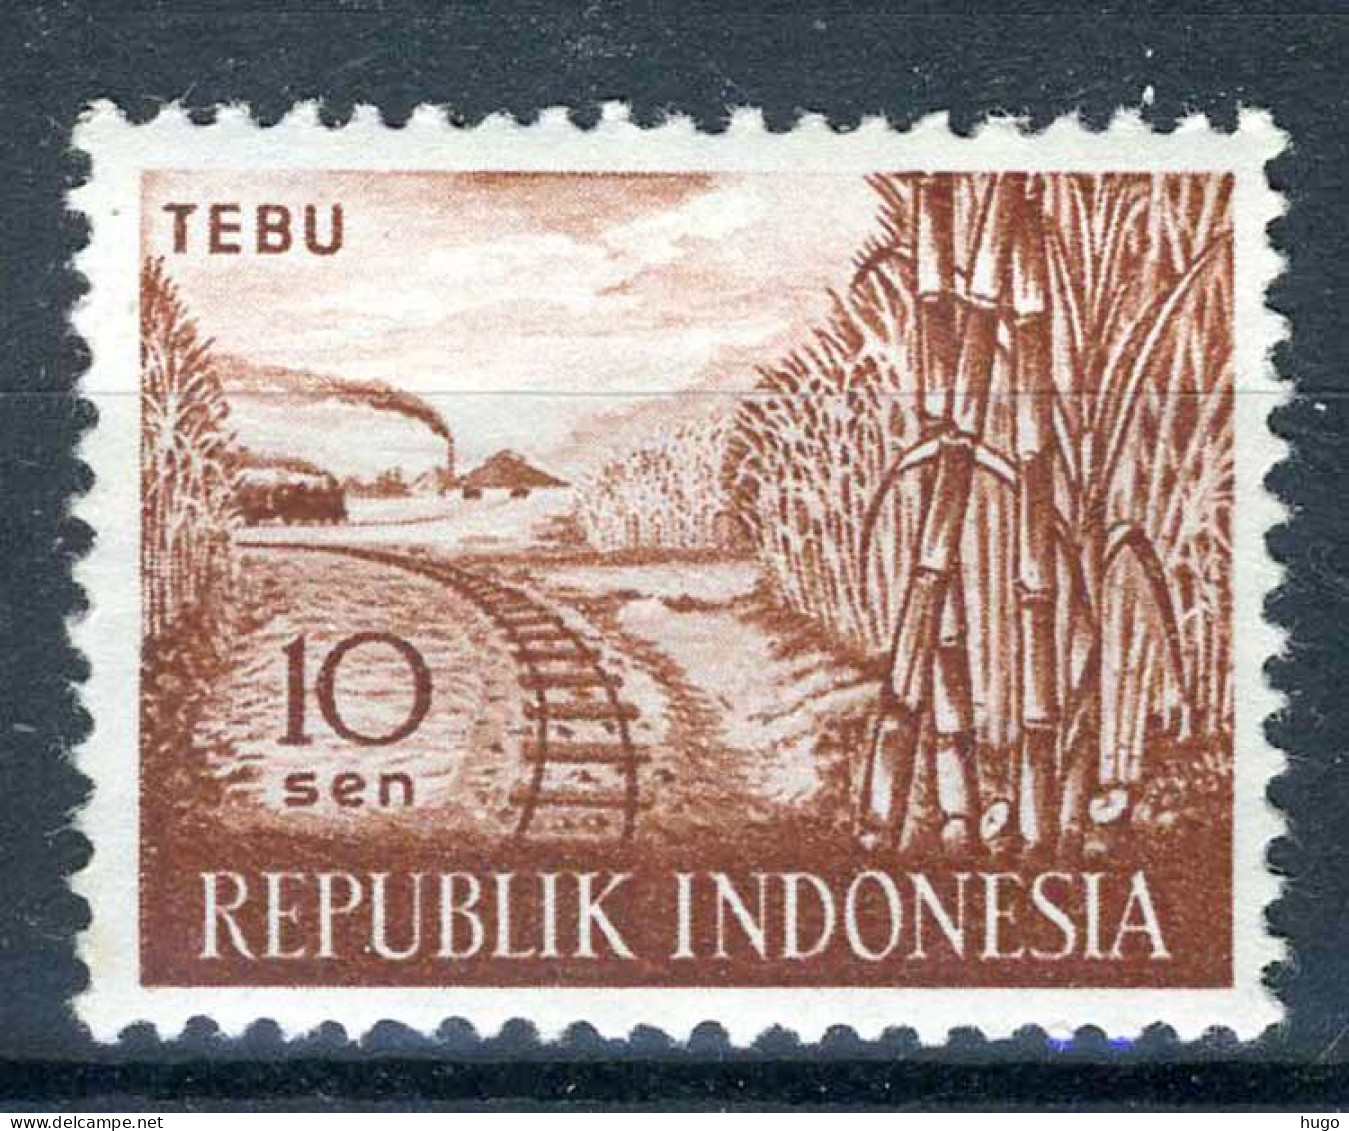 INDONESIE: ZB 269 MNH 1960 Produktenserie - Indonesië